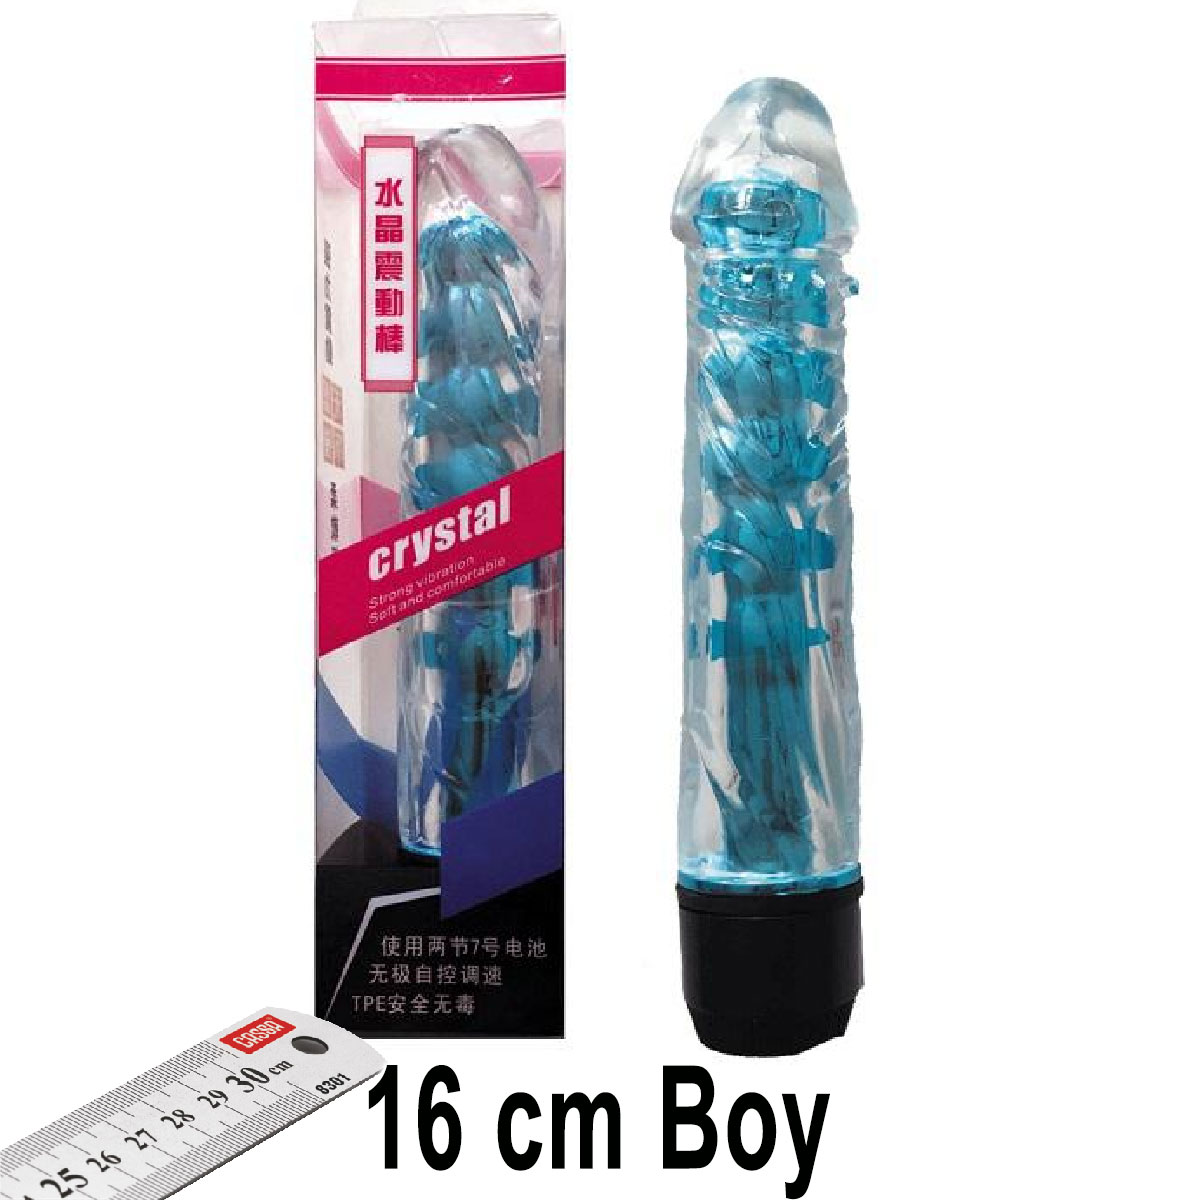 Crystal 16 cm Boy Mavi Renk Vibratr ve Zevk Kilifi Seti AL-Q028